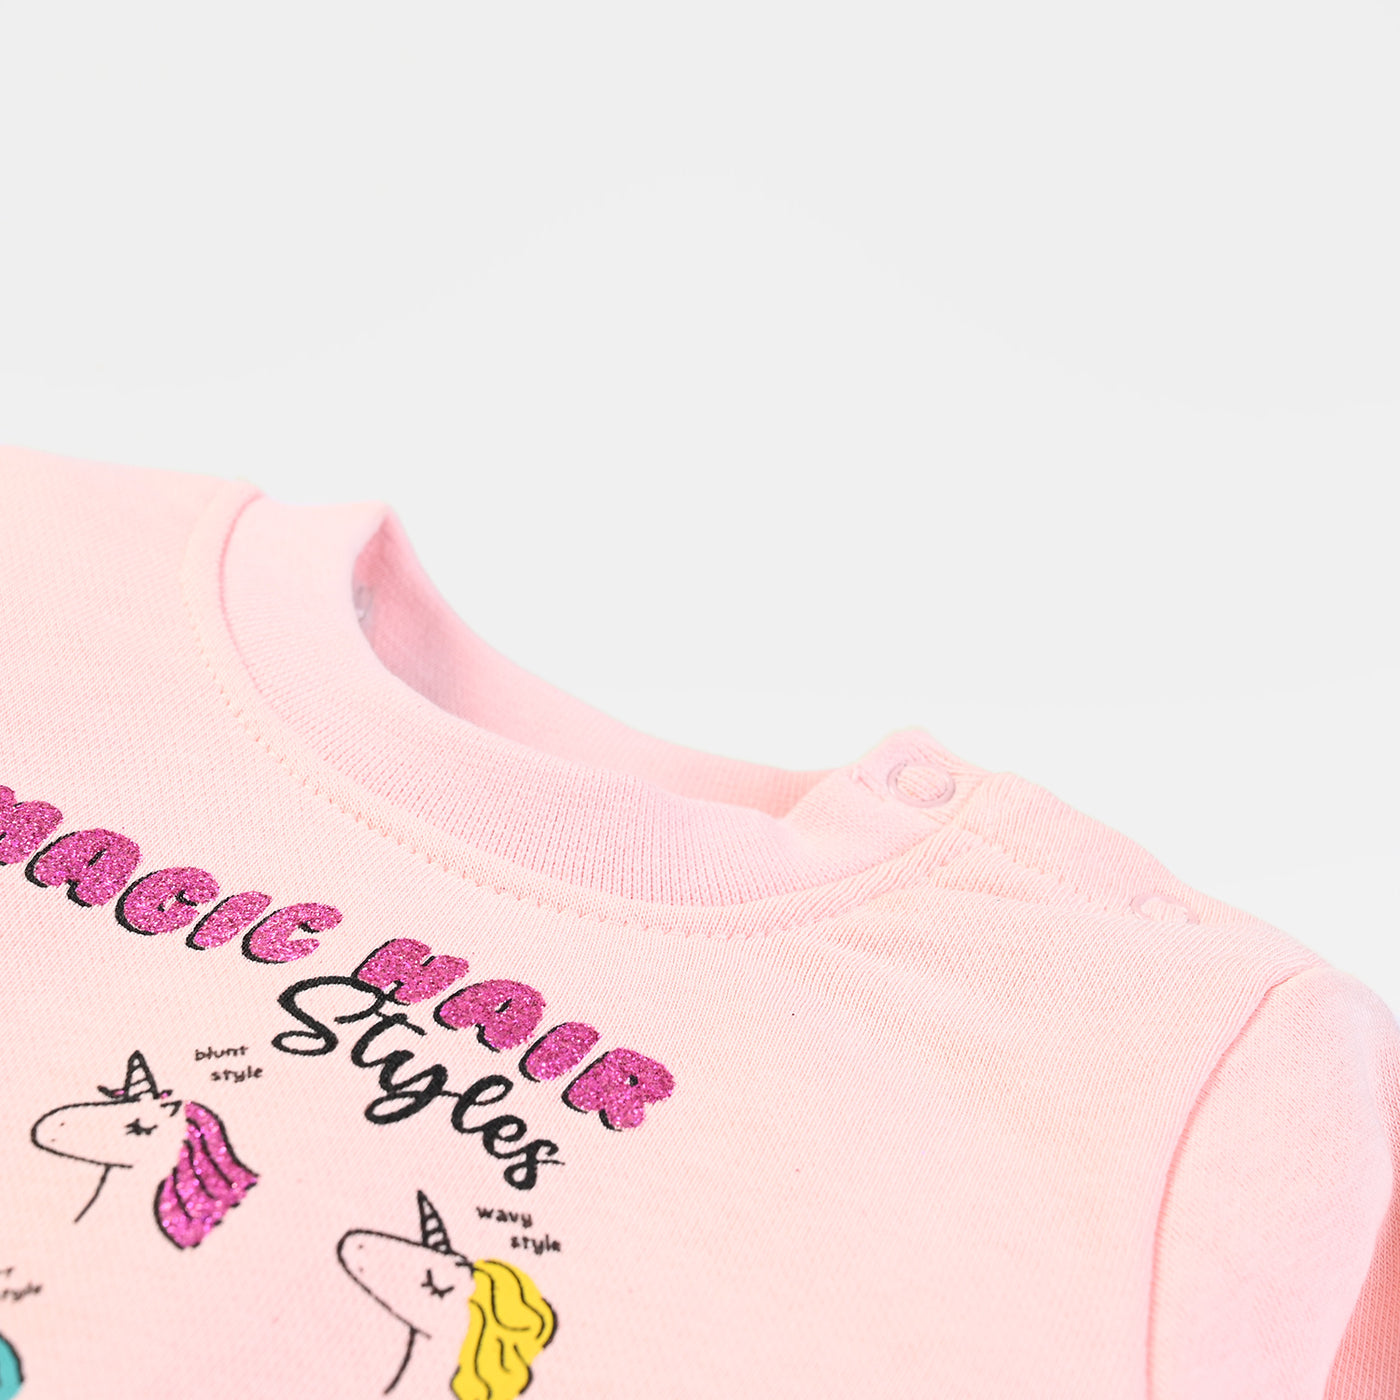 Infants Girls Fleece Sweatshirt Magic Hair-Light Pink